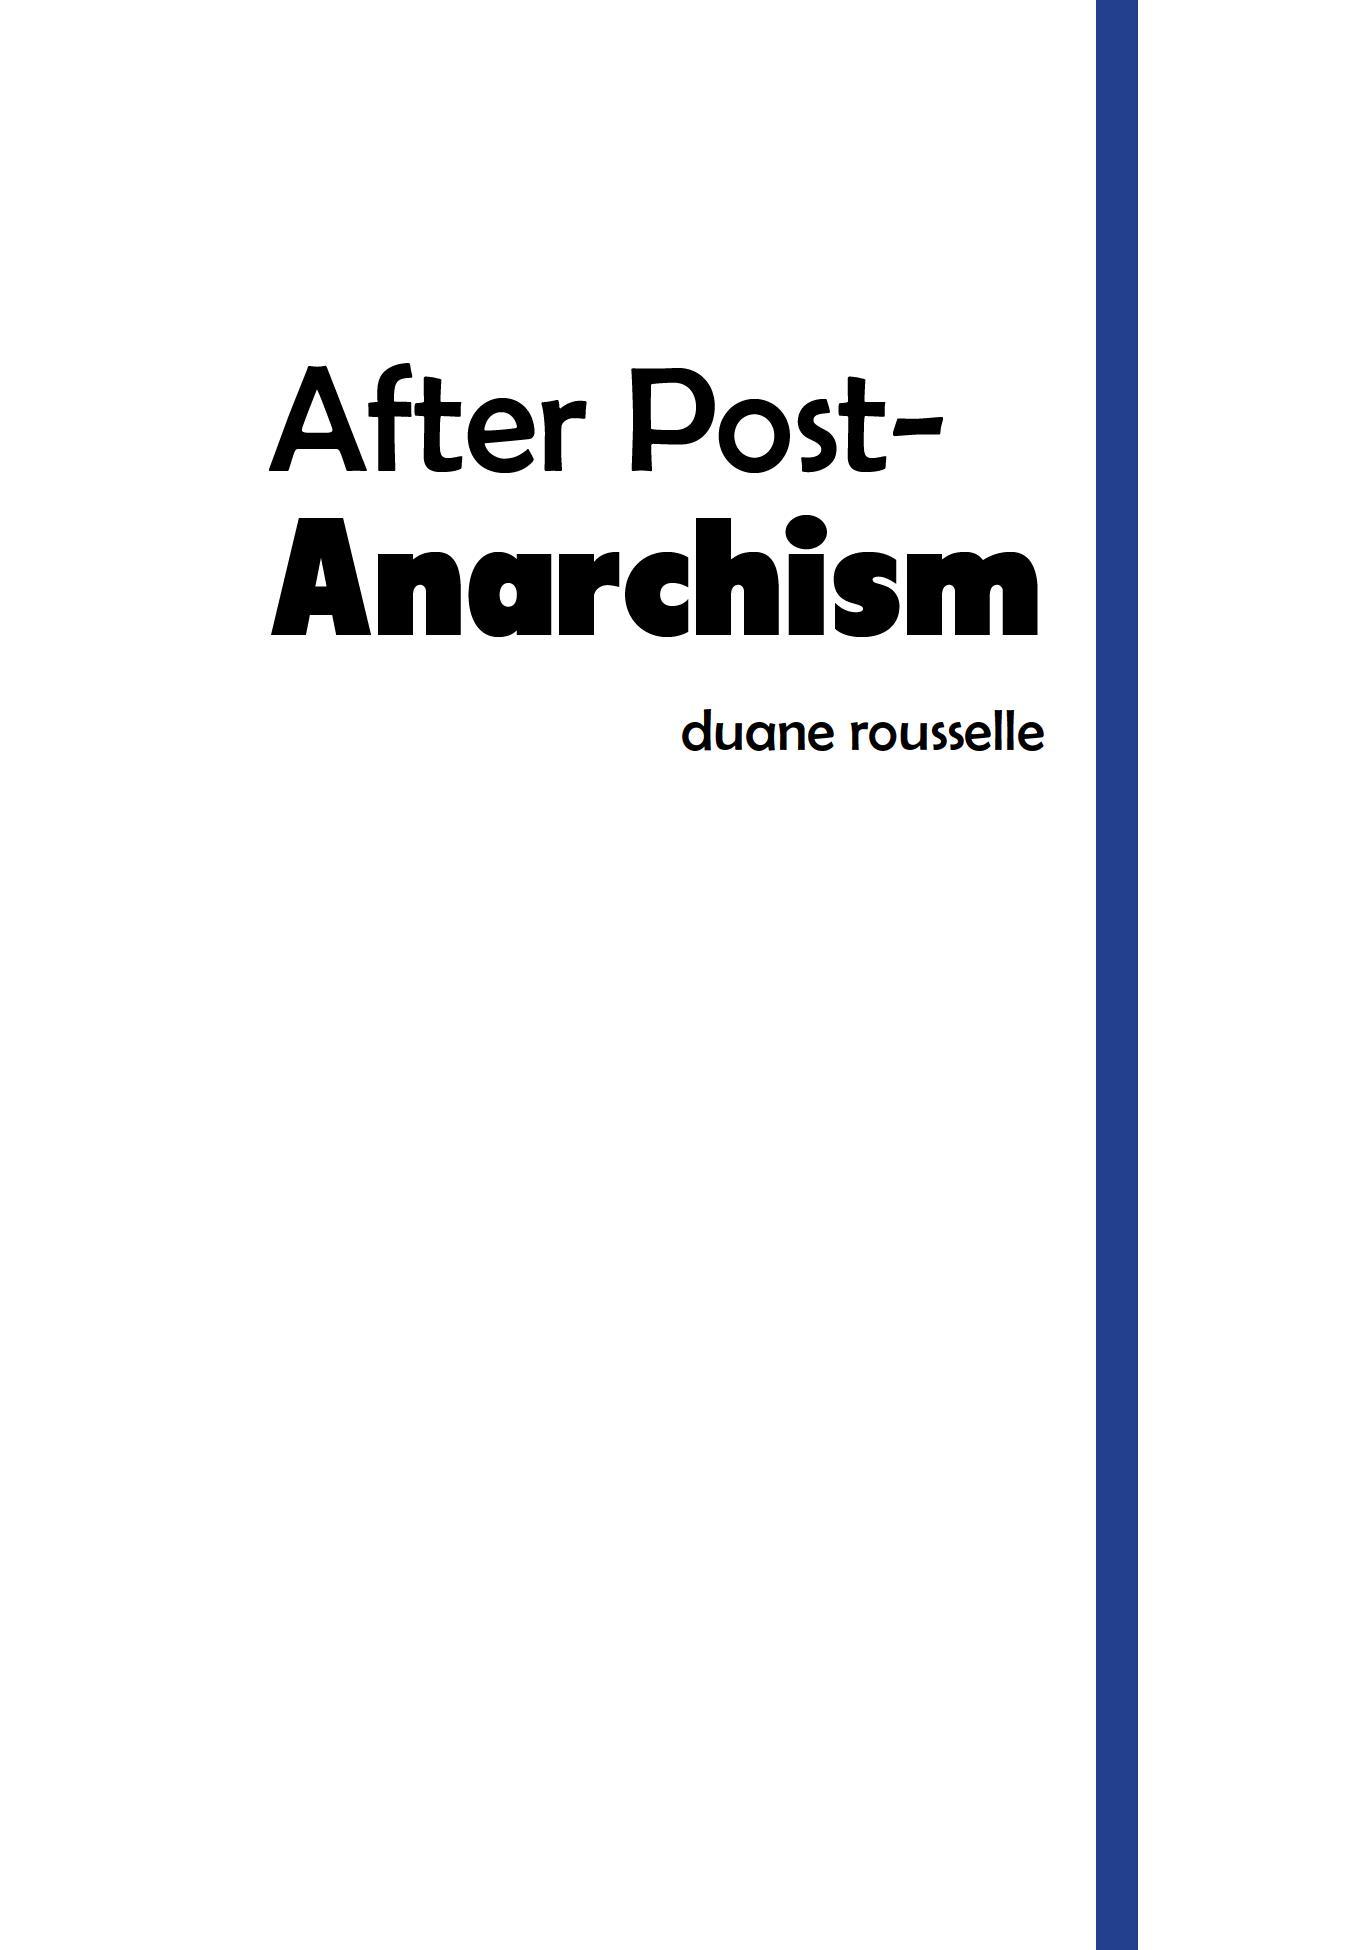 d-r-duane-rousselle-after-post-anarchism-1.jpg